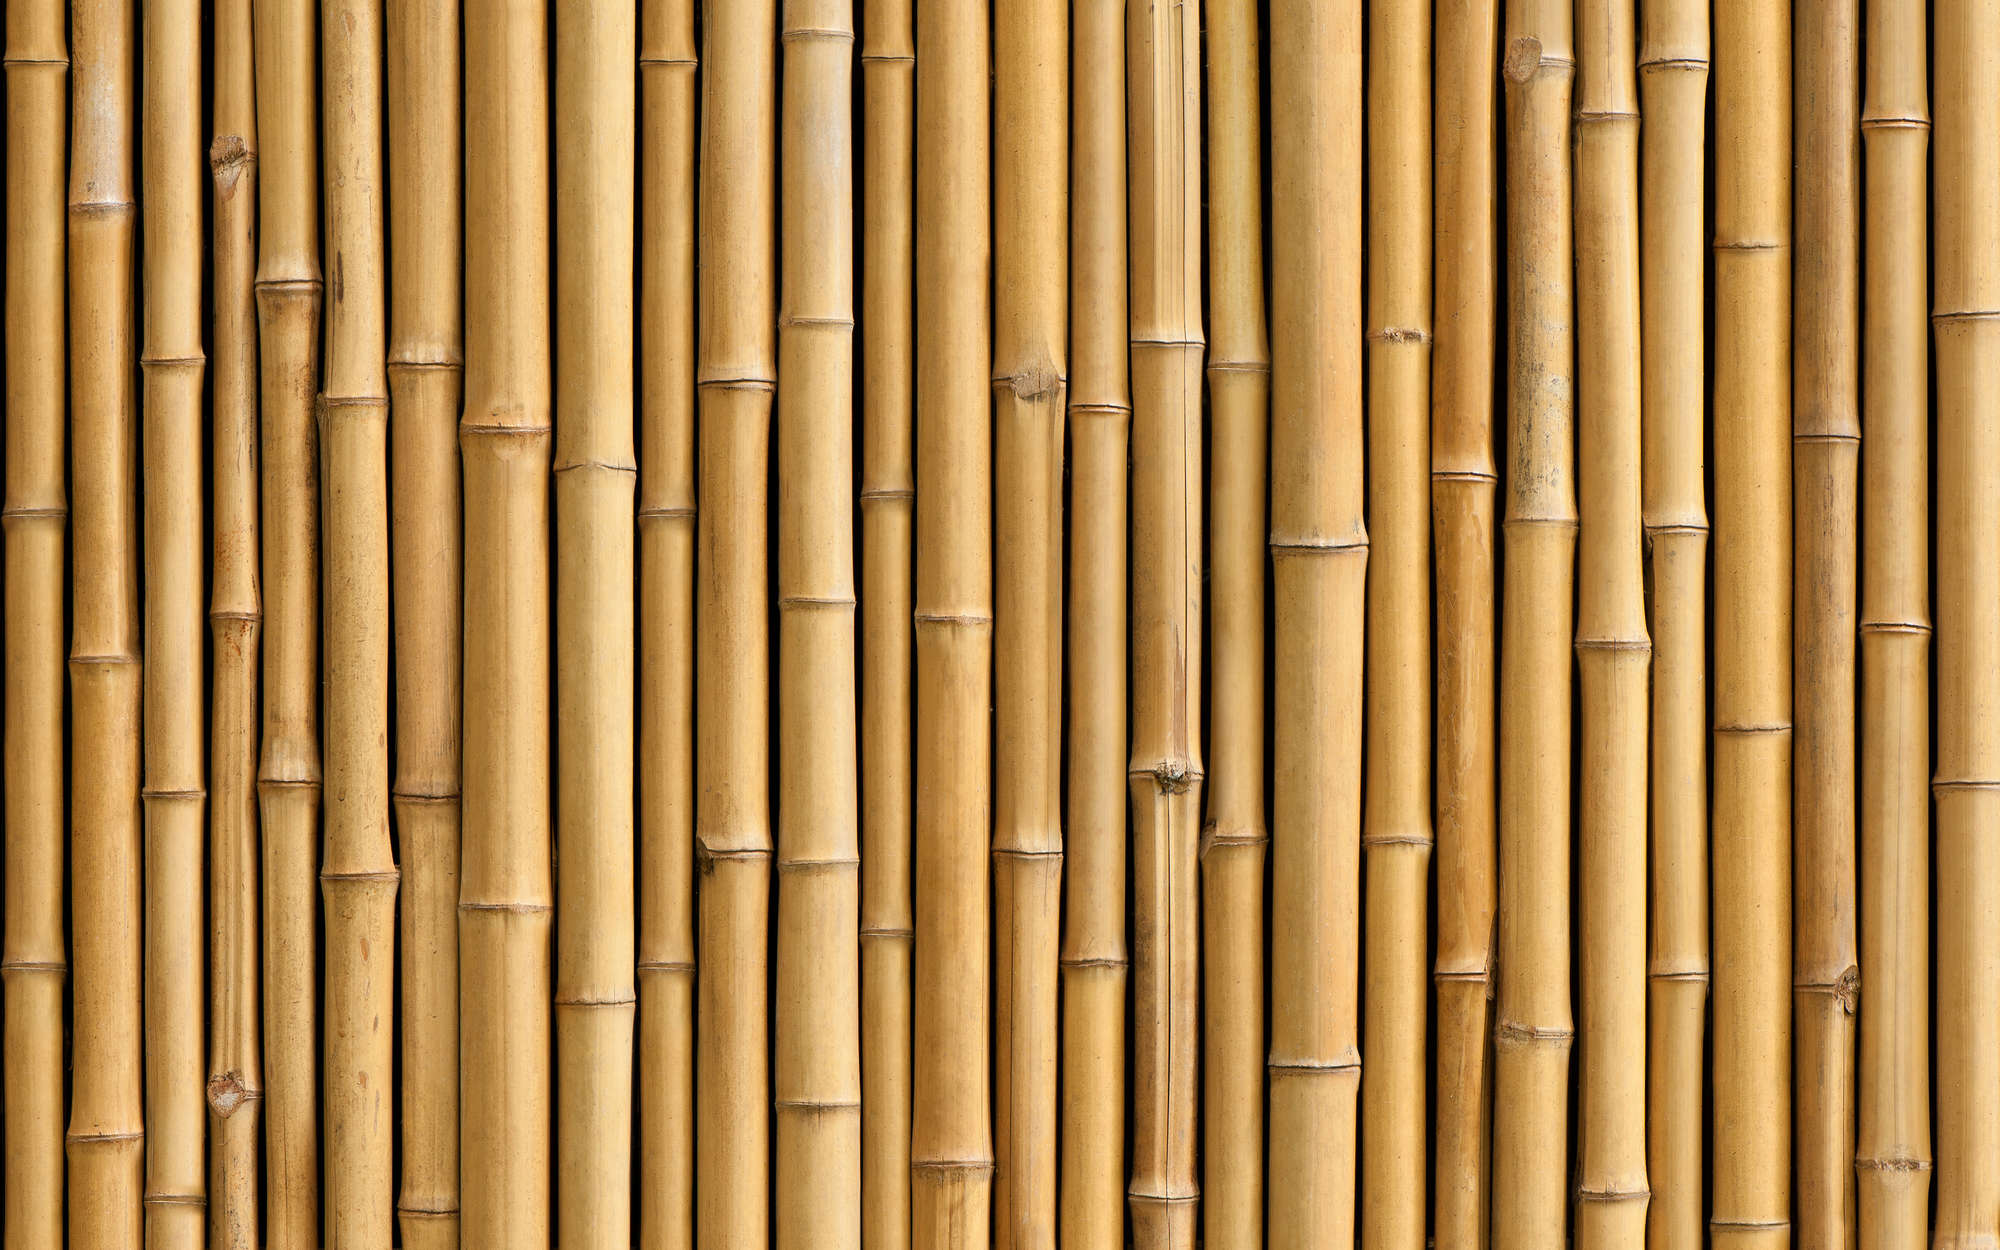             Fototapete Wand aus Bambus in Beige – Premium Glattvlies
        